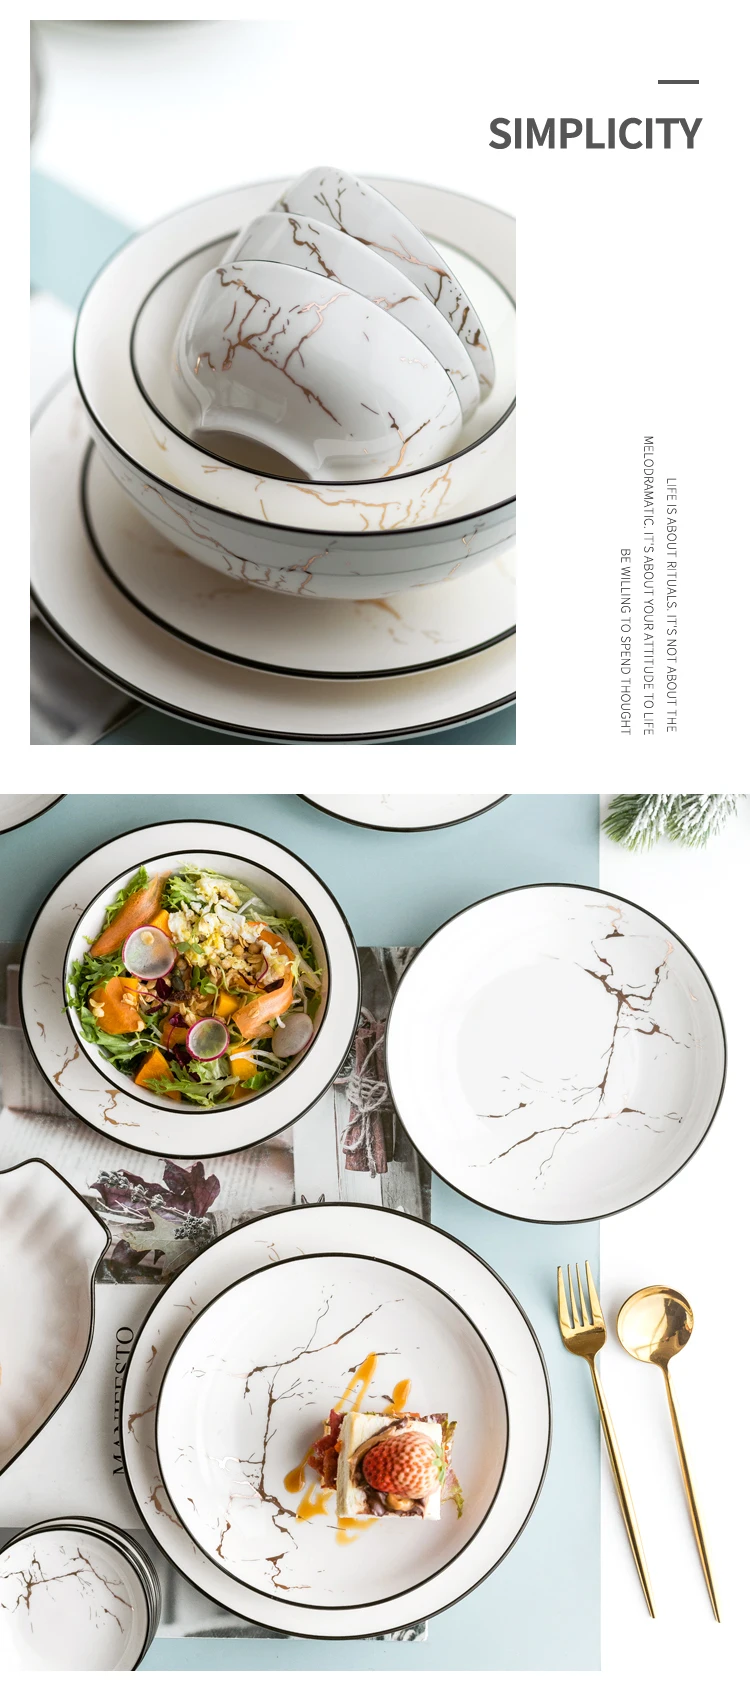 redonda pratos domésticos utensílios de mesa placas